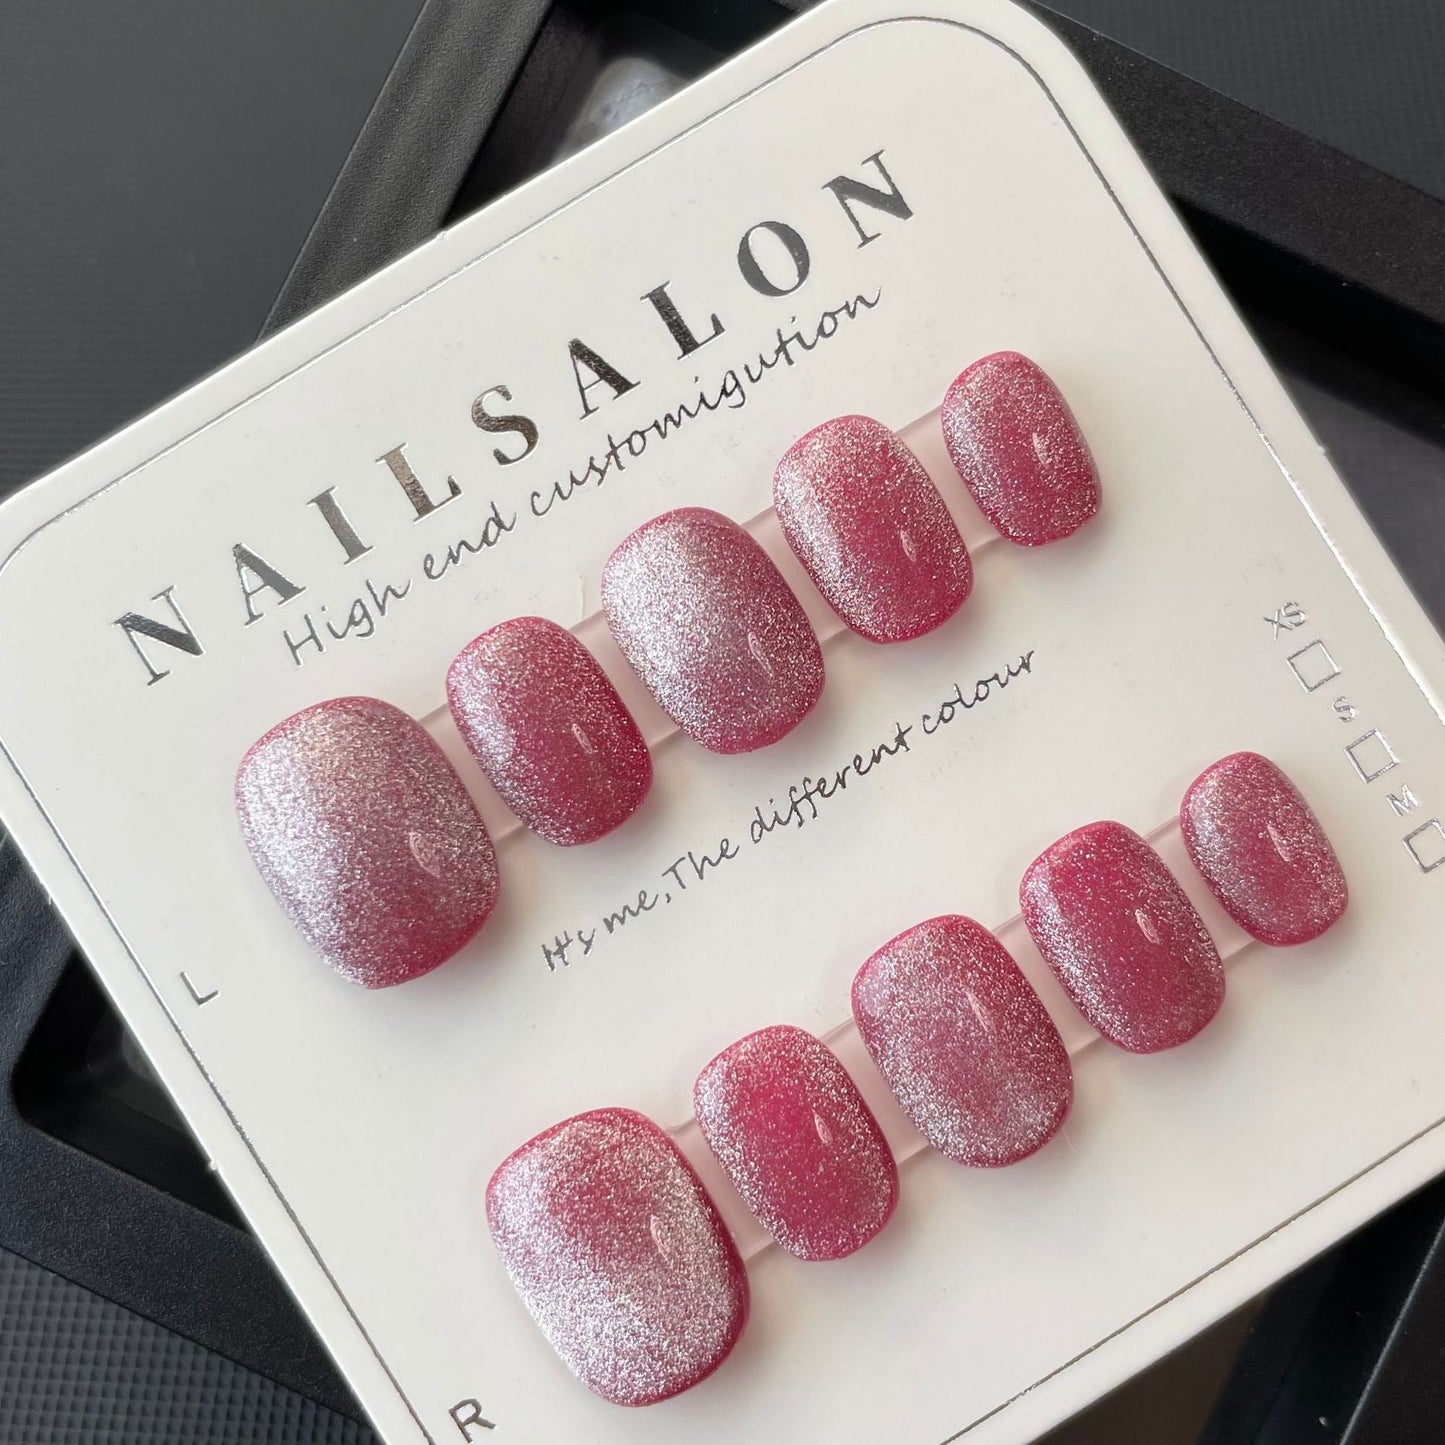 723 Cateye Effect style press on nails 100% handmade false nails pink